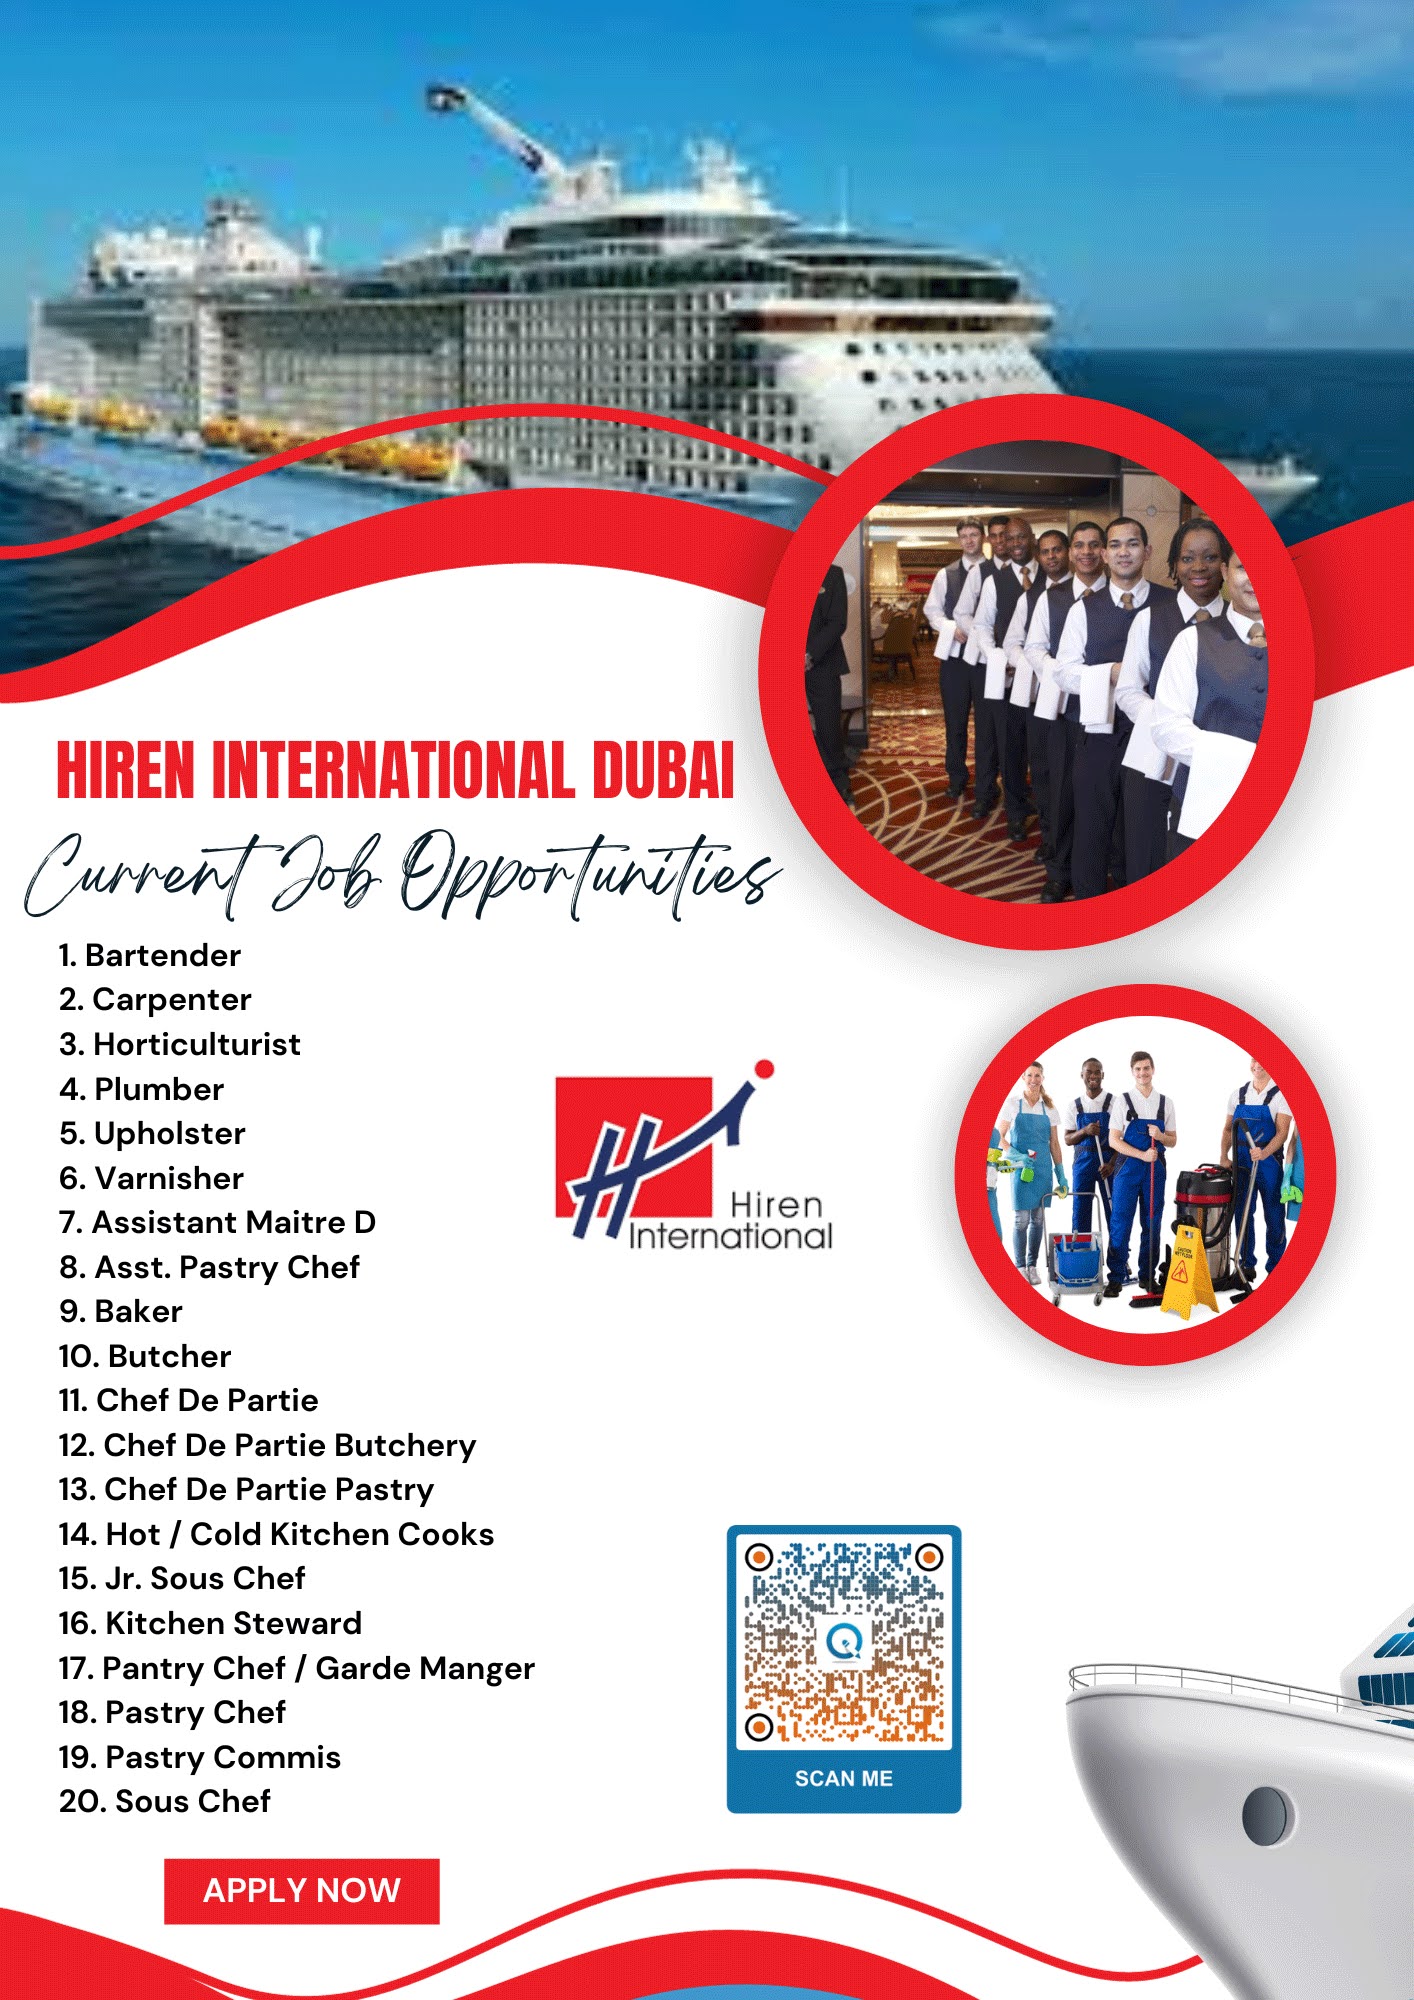 hiren international dubai cruise jobs